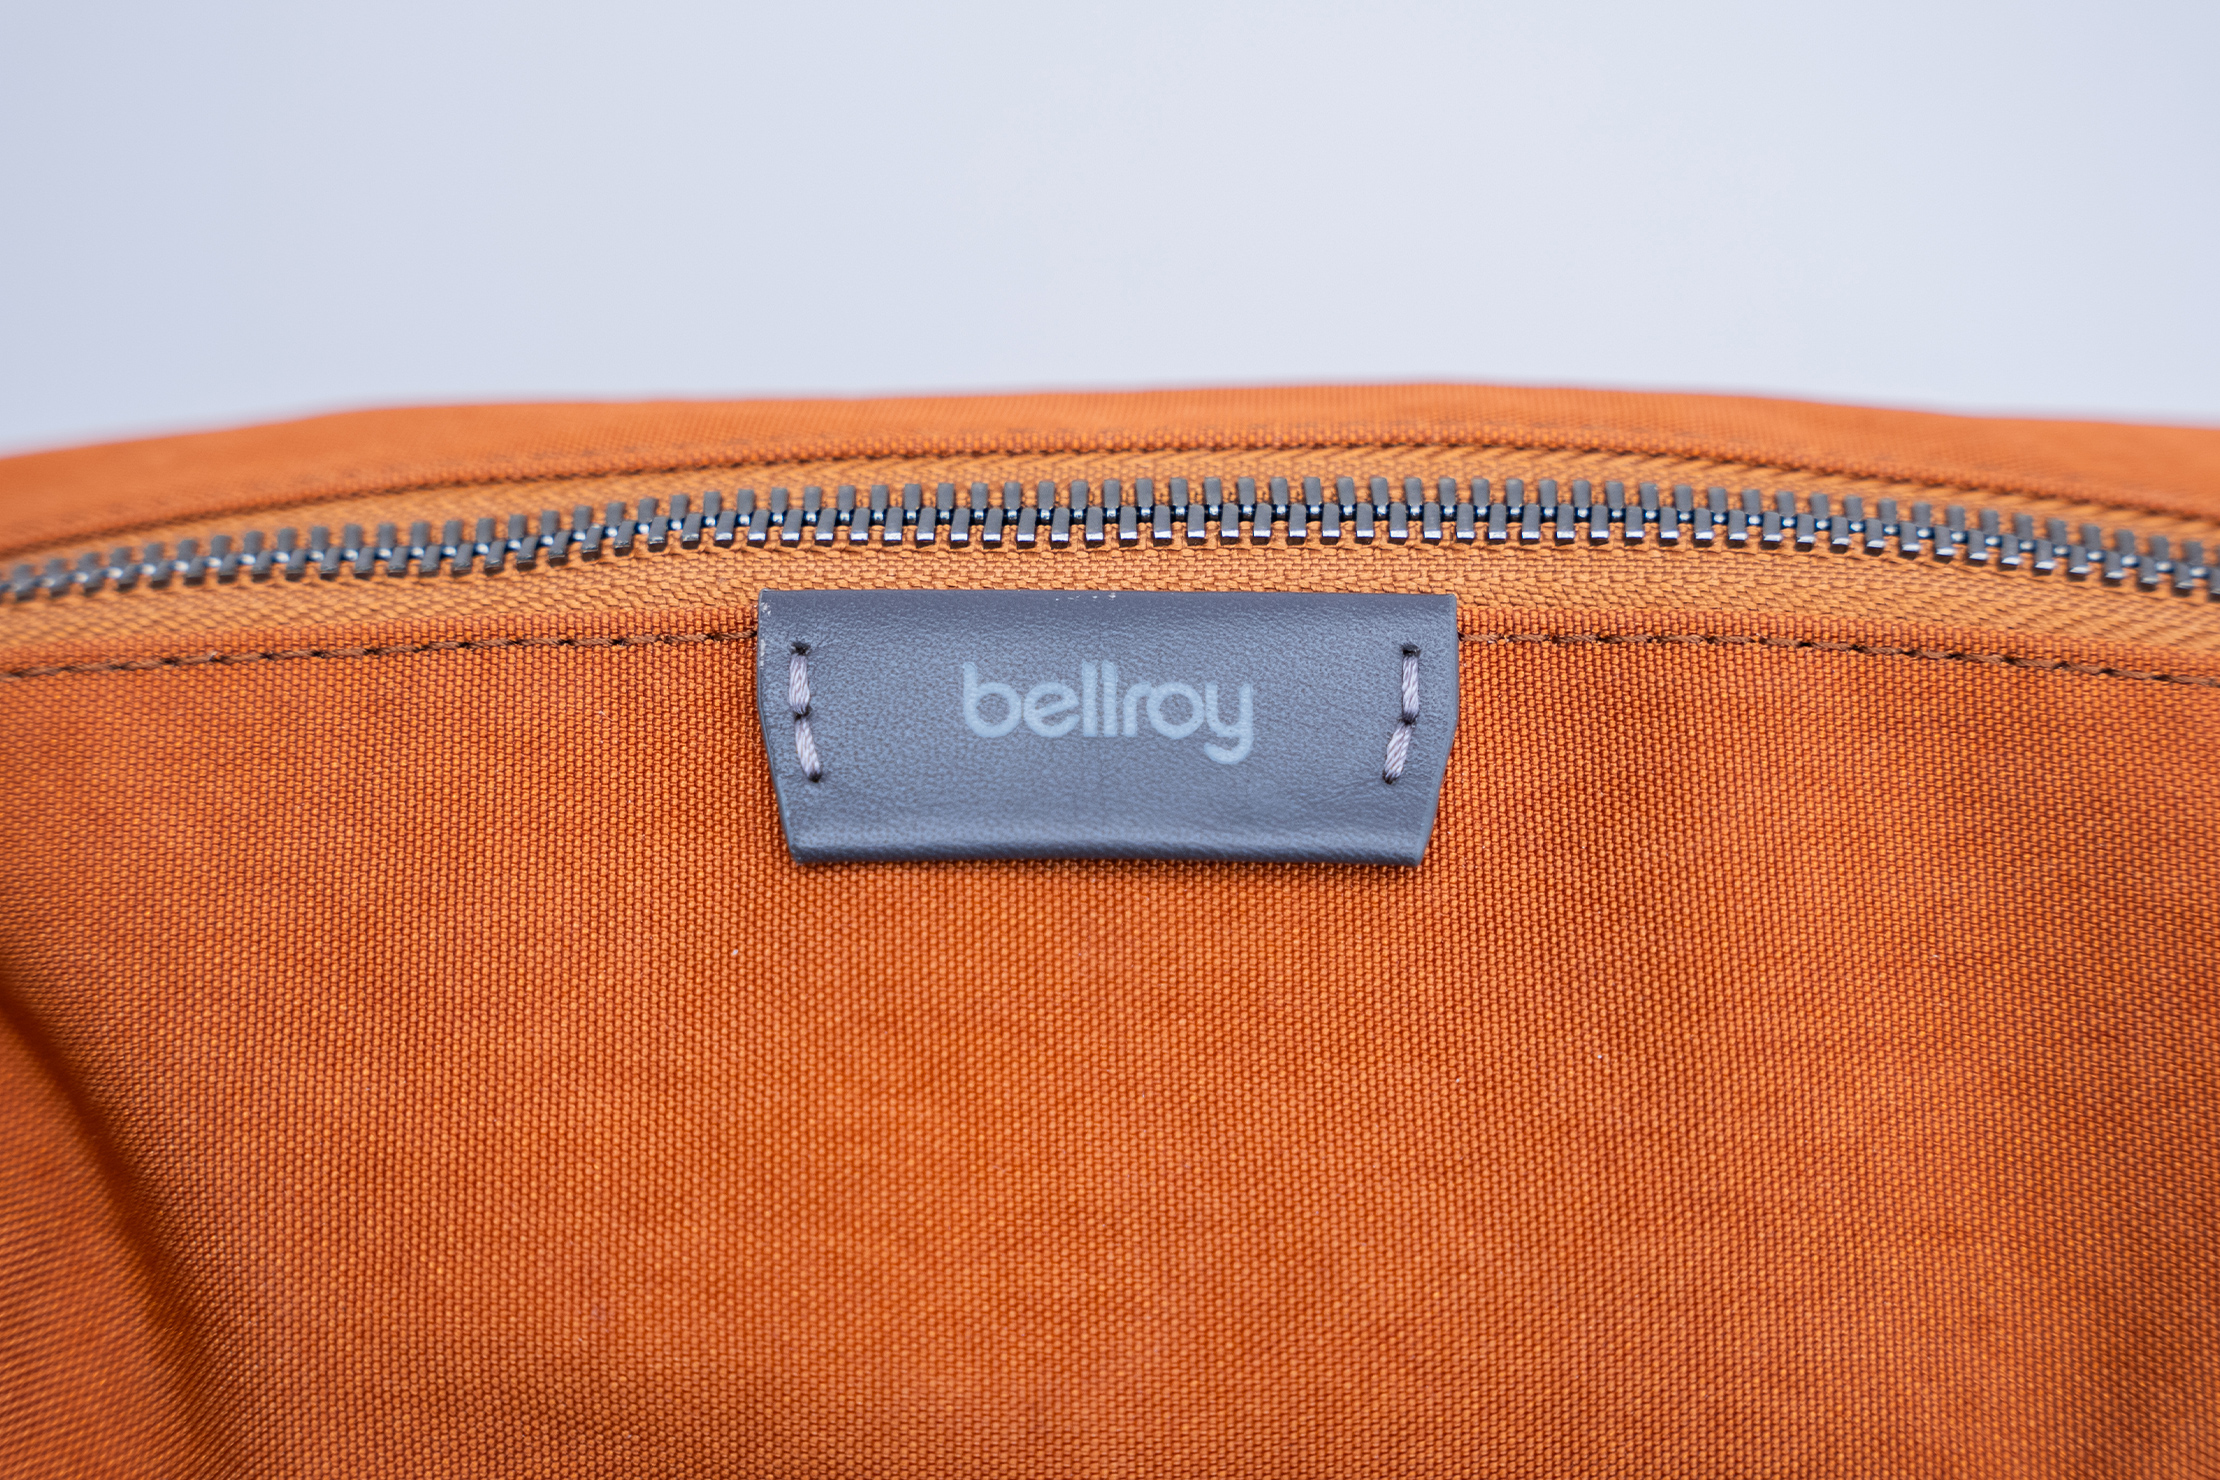 Bellroy Toiletry Kit Plus Brand